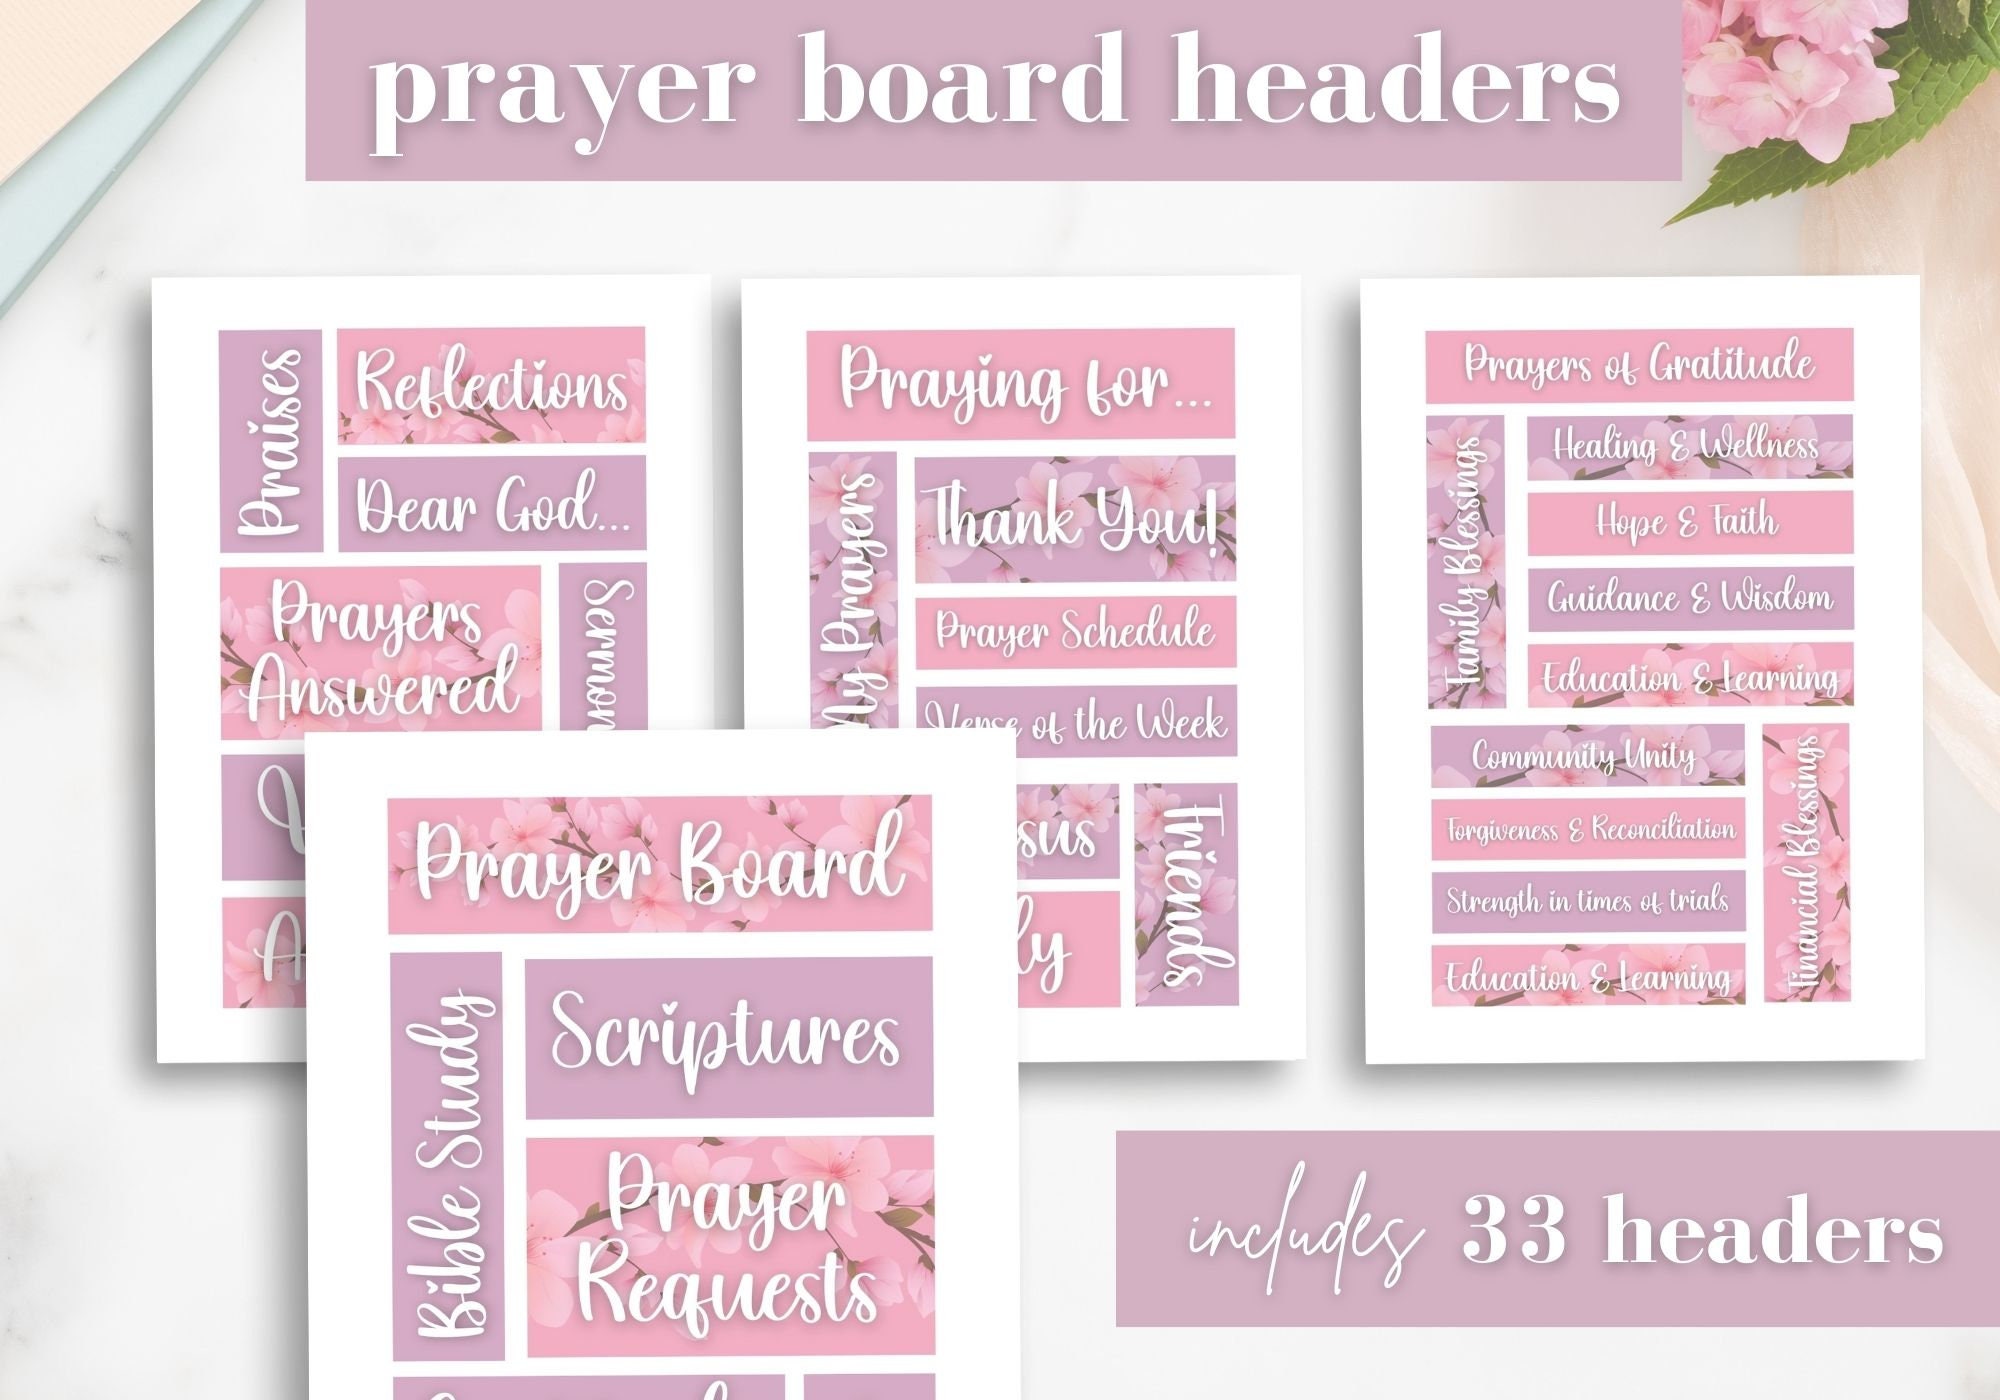 Pink Prayer Board Kit, Printable Prayer Cards, Christian Wall Collage,  Prayer Planner, Scripture on Prayer Enhance Your Prayer Life 